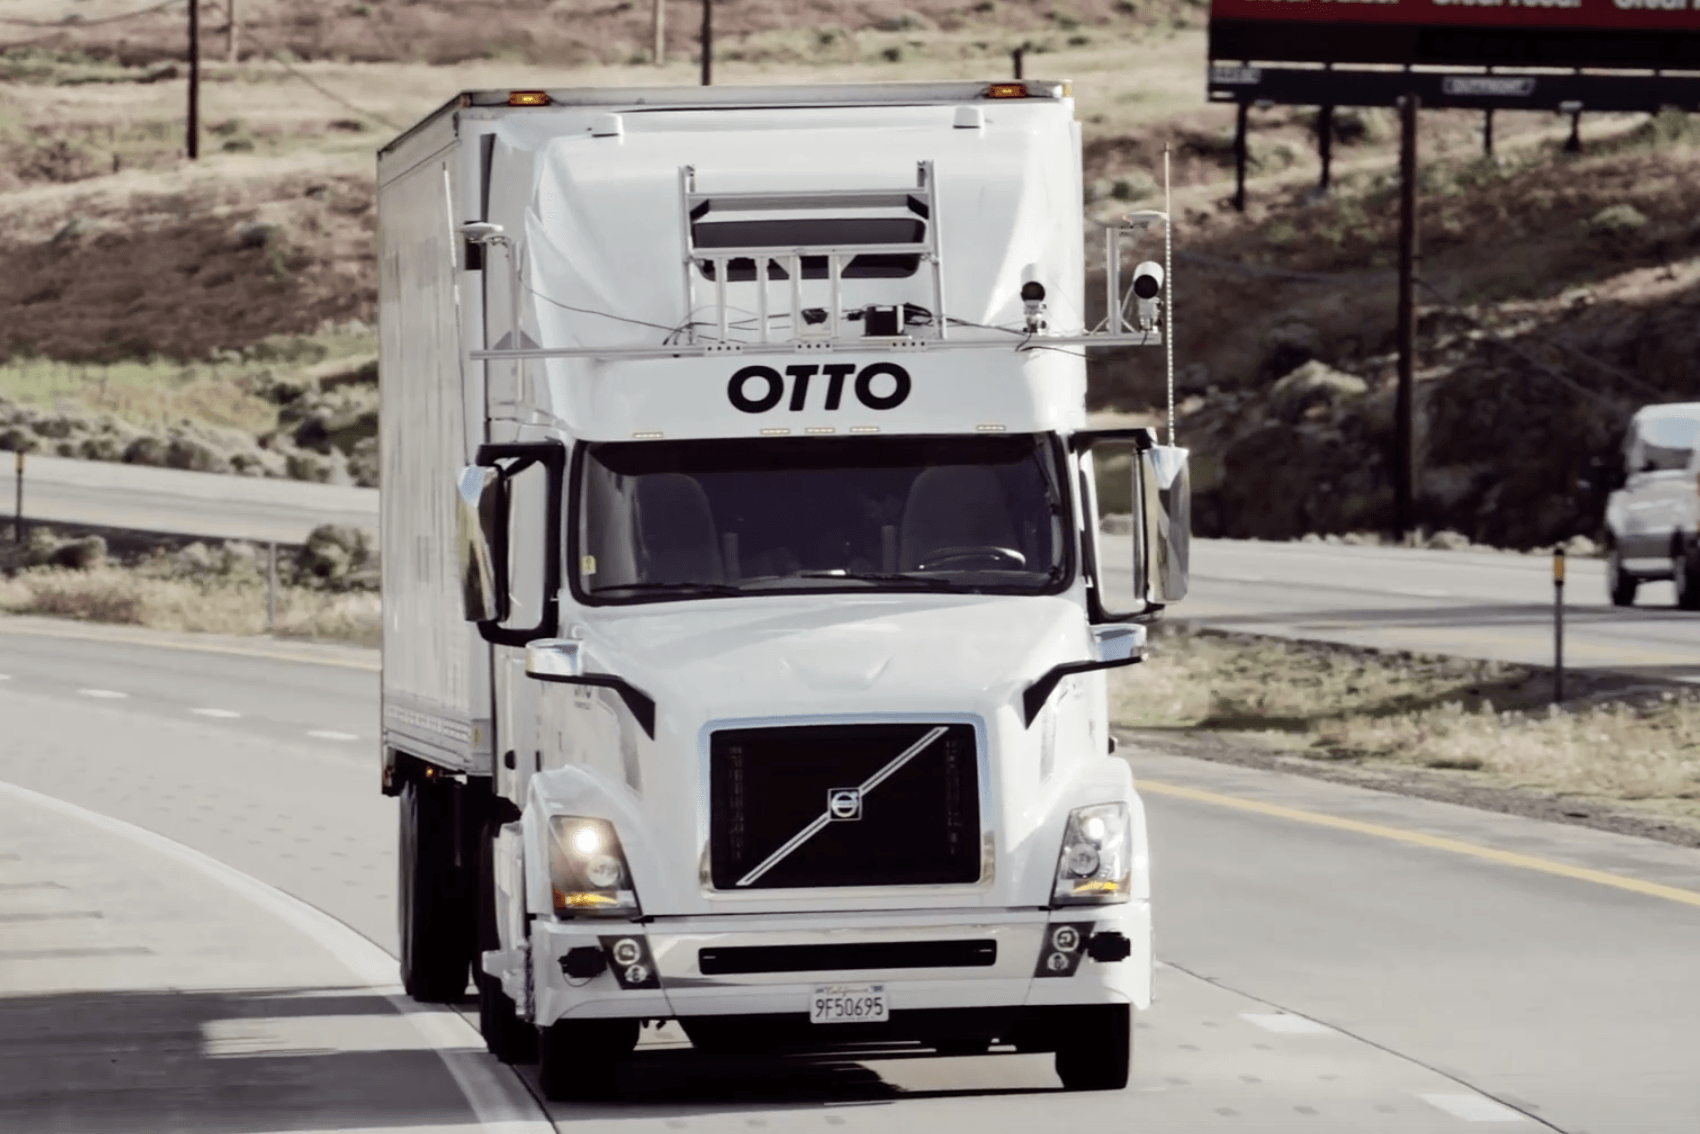 Otto autonomous truck